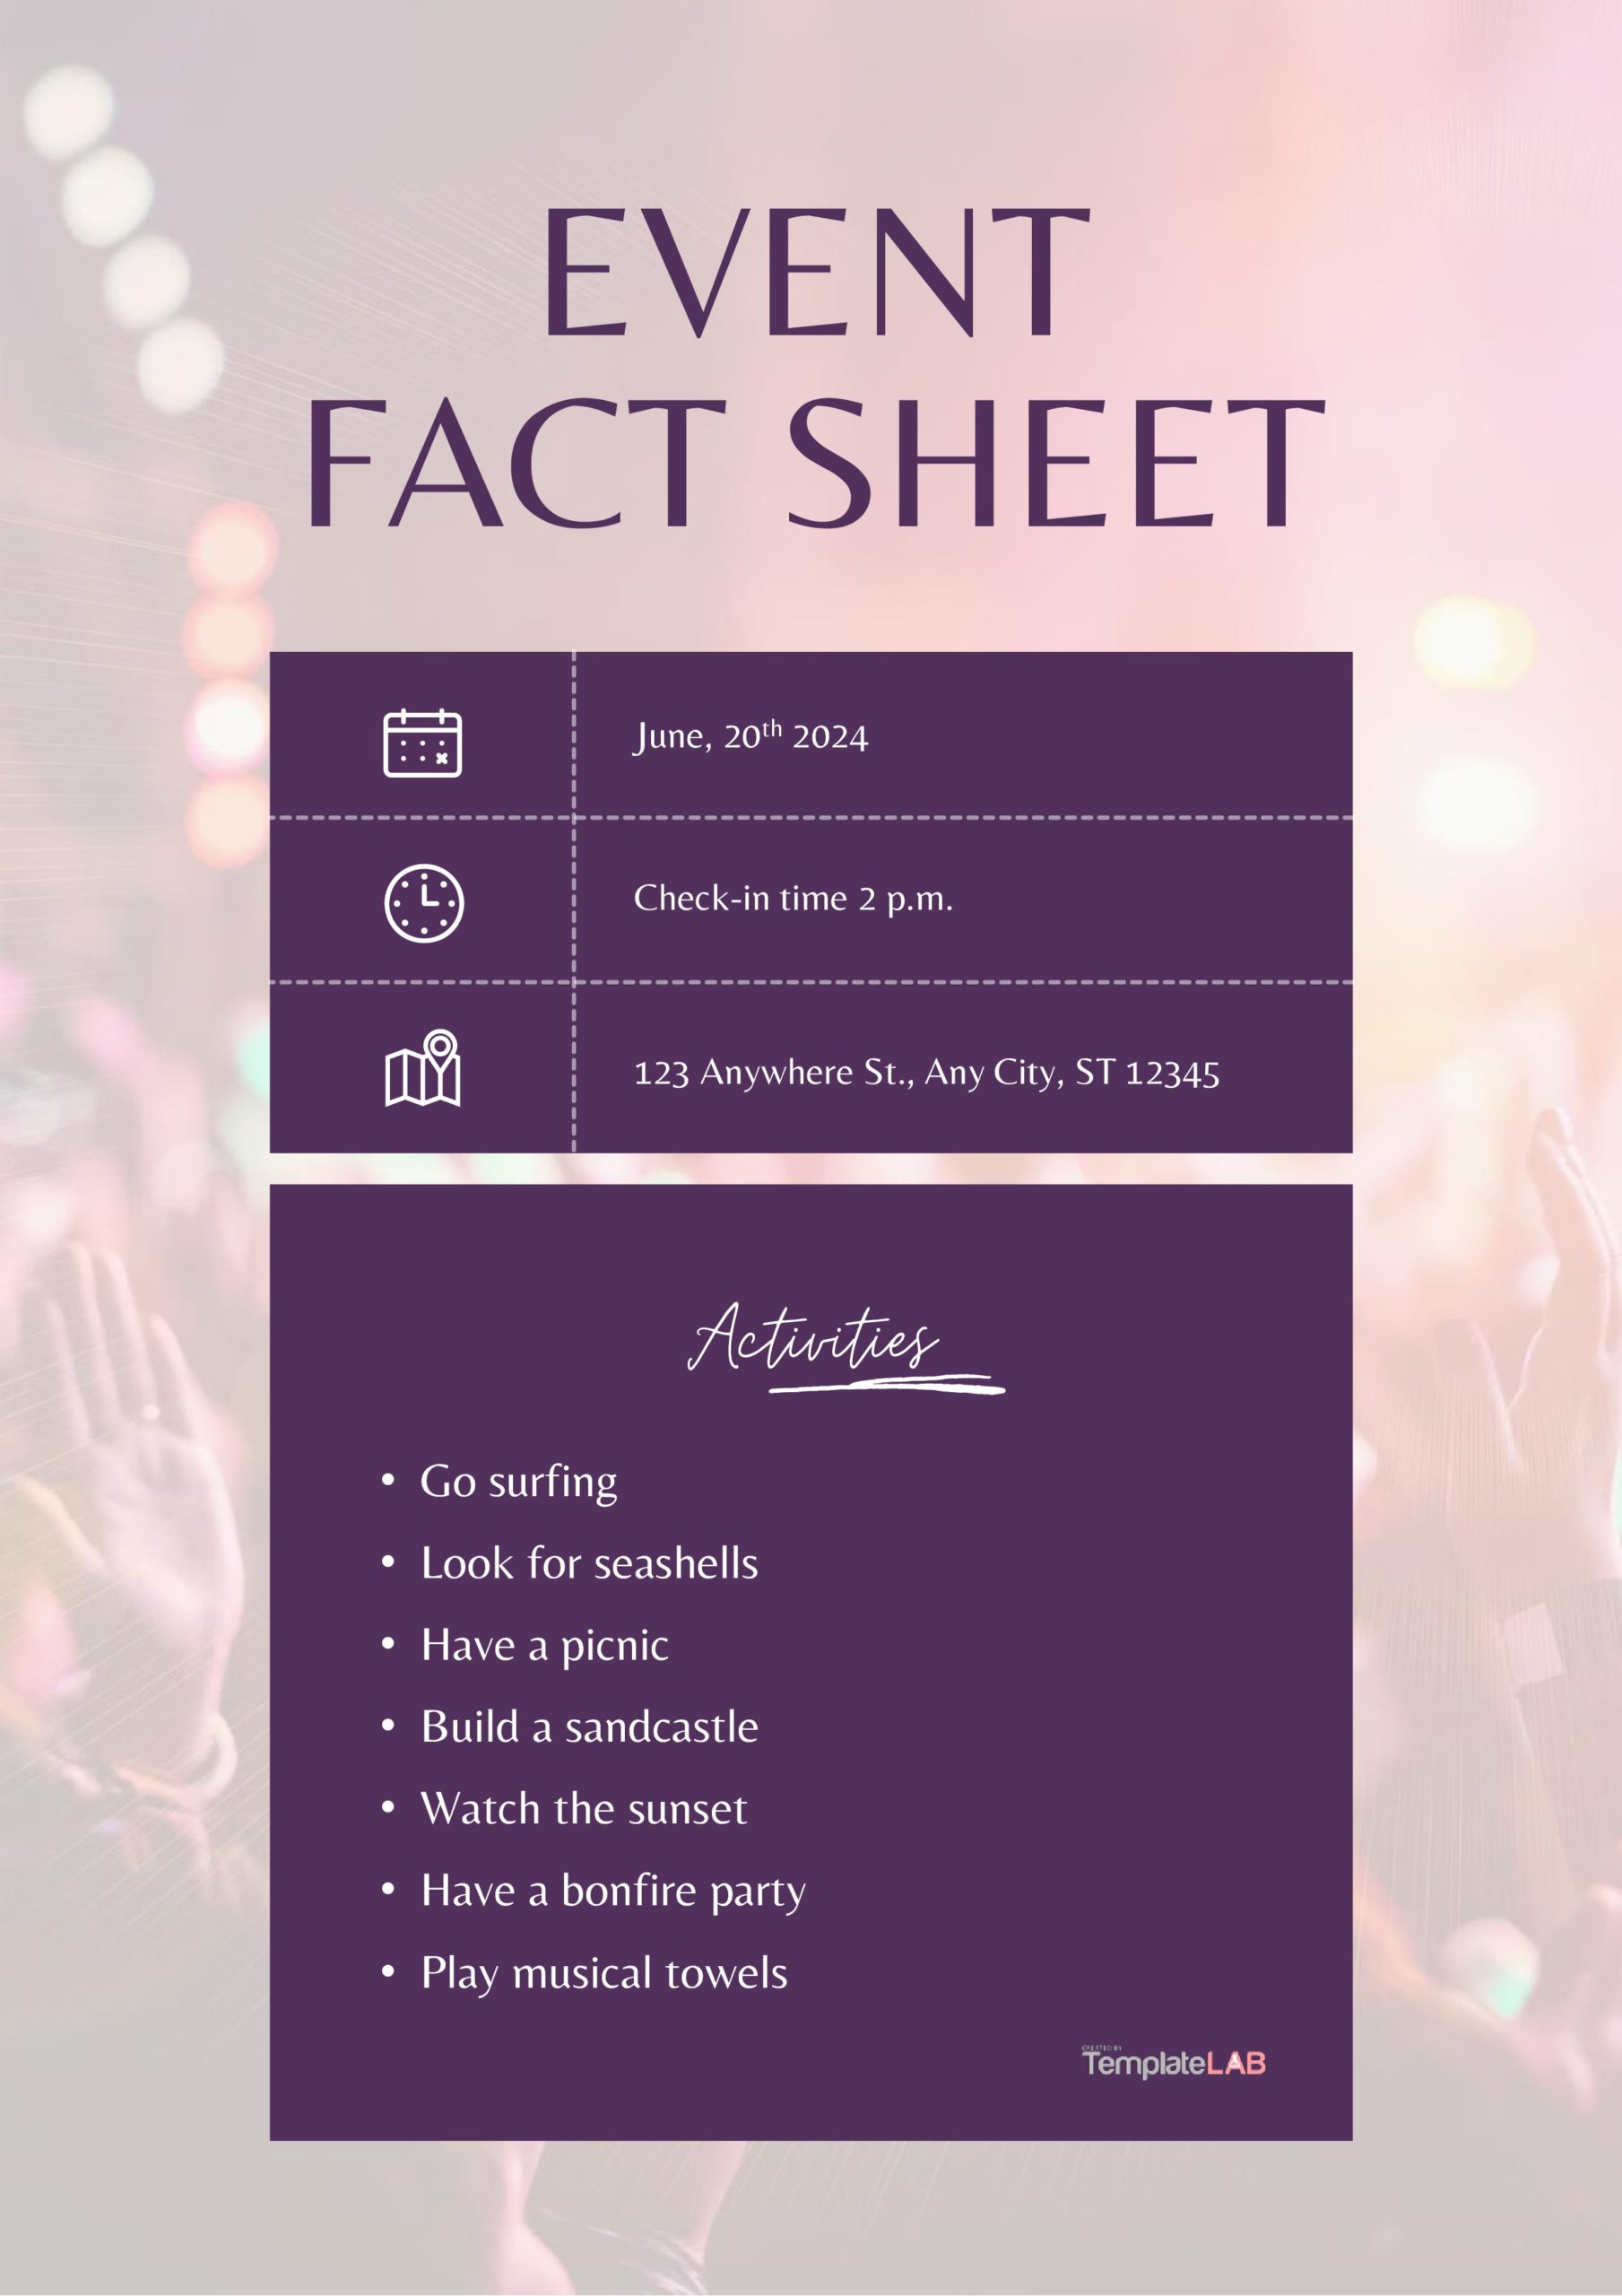 Free Event Fact Sheet Template